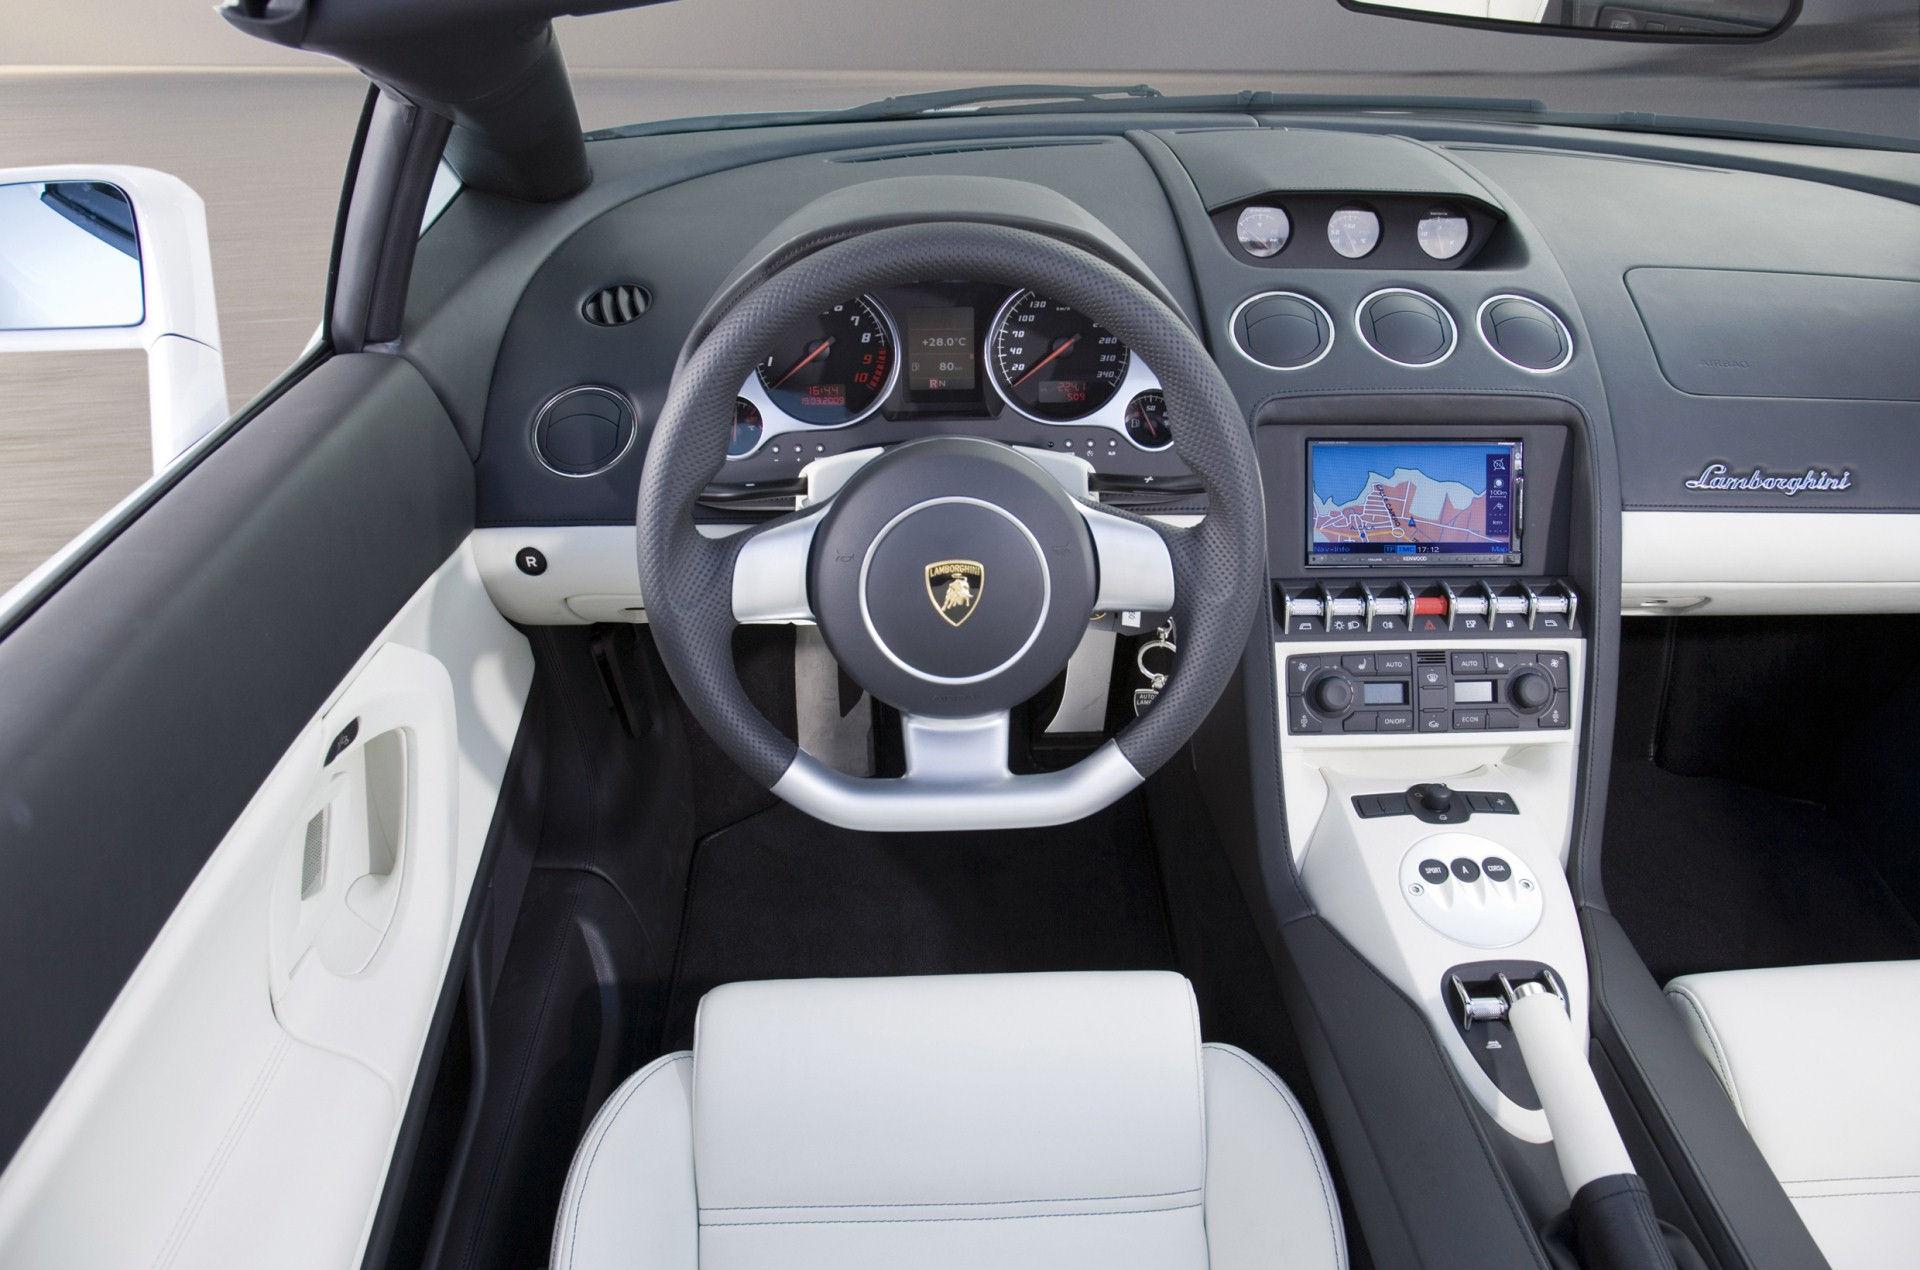 Ausfuhrliche Modellbeschreibung Uber Den Lamborghini